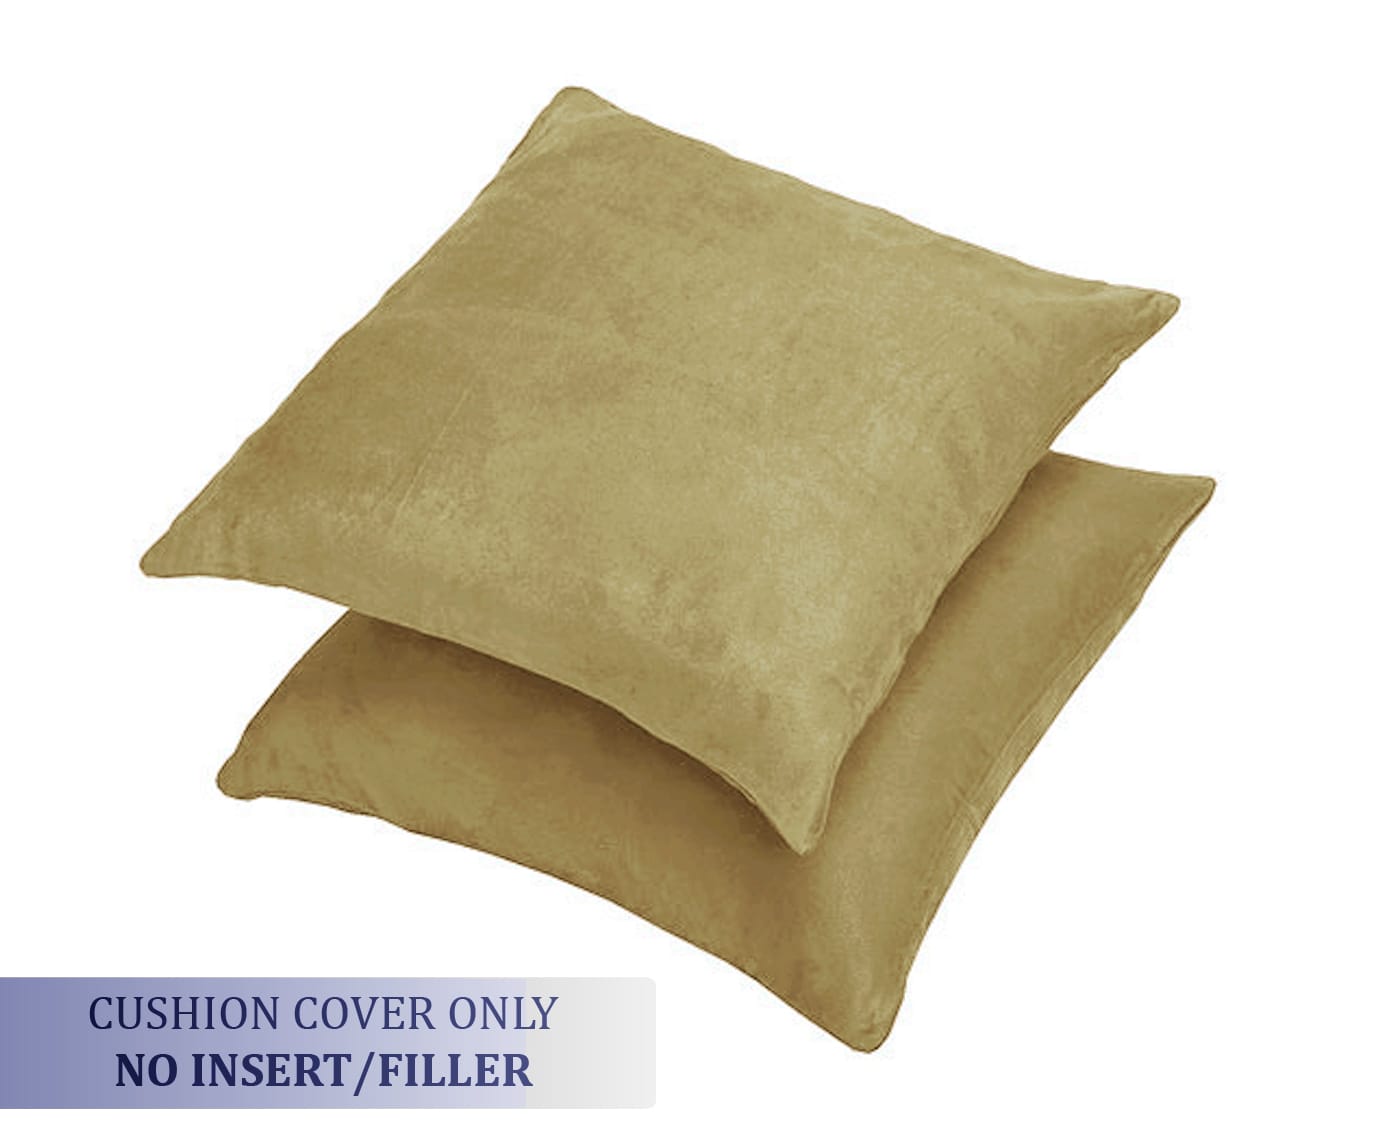 Luxurious Microfiber Suede Velvet Cushion Cover Set in Mehndi online in India